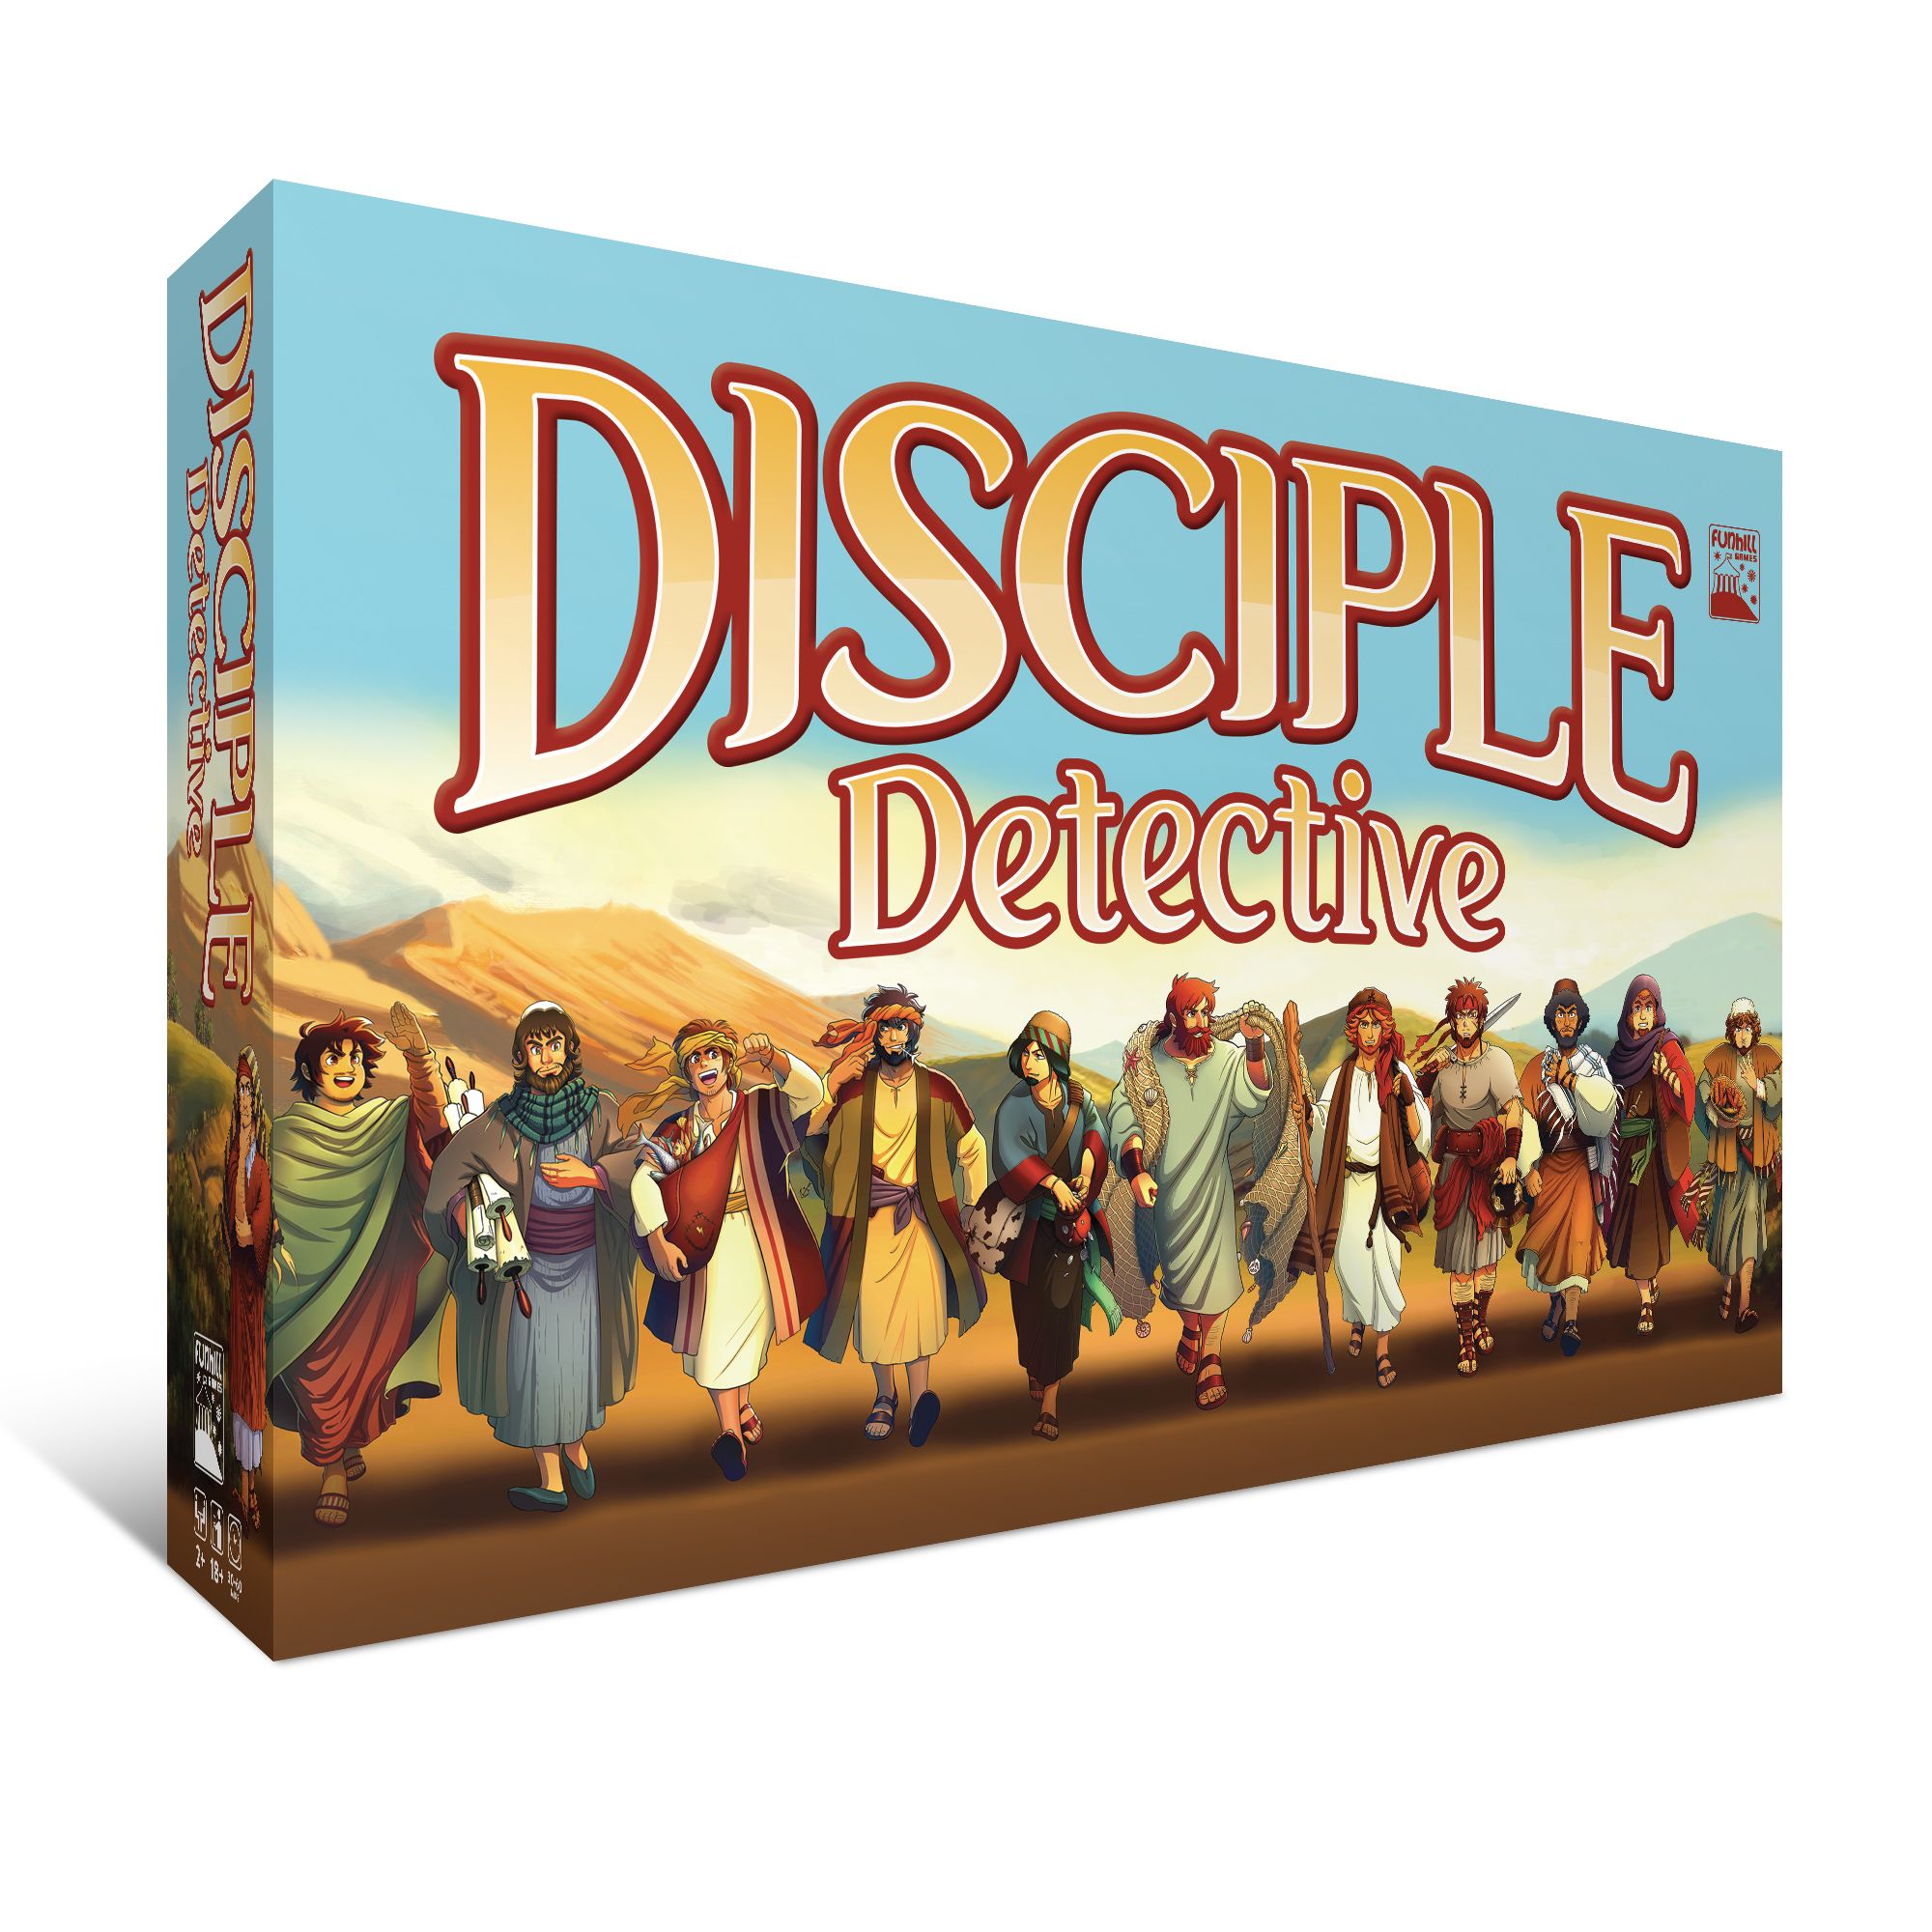 Disciple Detective